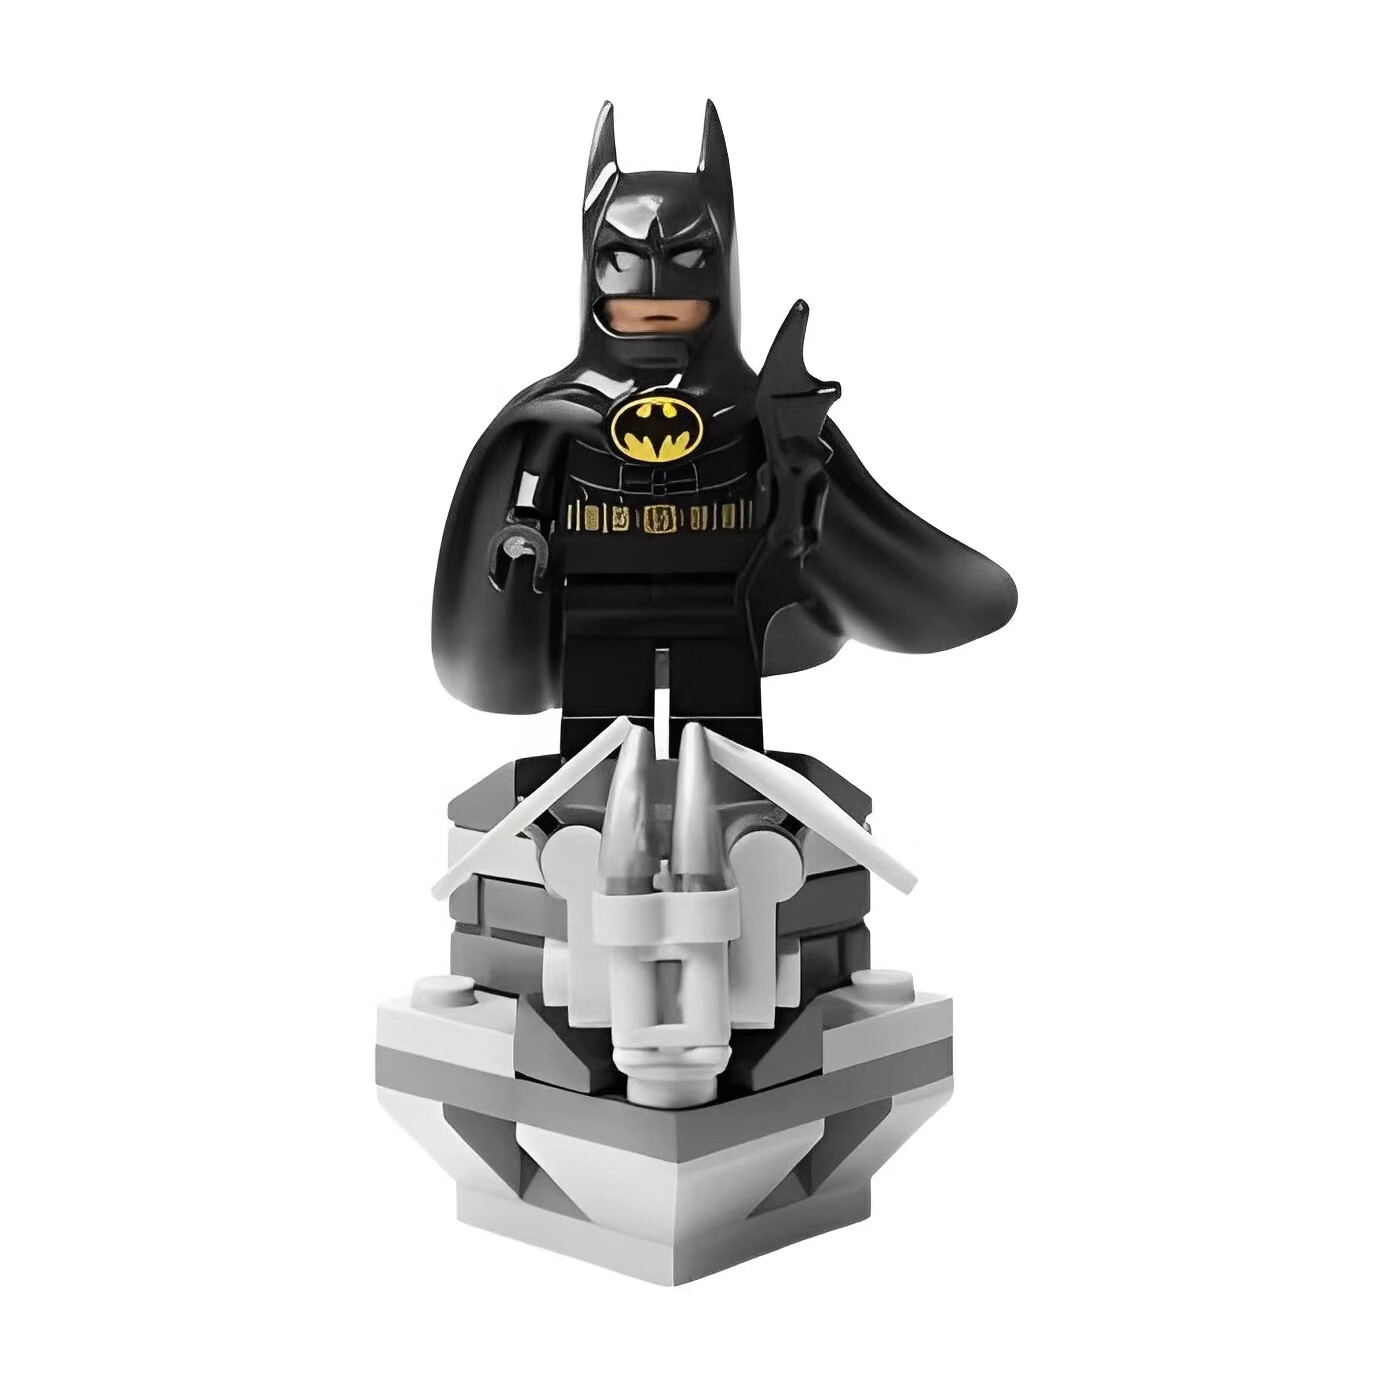 LEGO 乐高 蝙蝠侠系列 30653 1992蝙蝠侠 35.1元